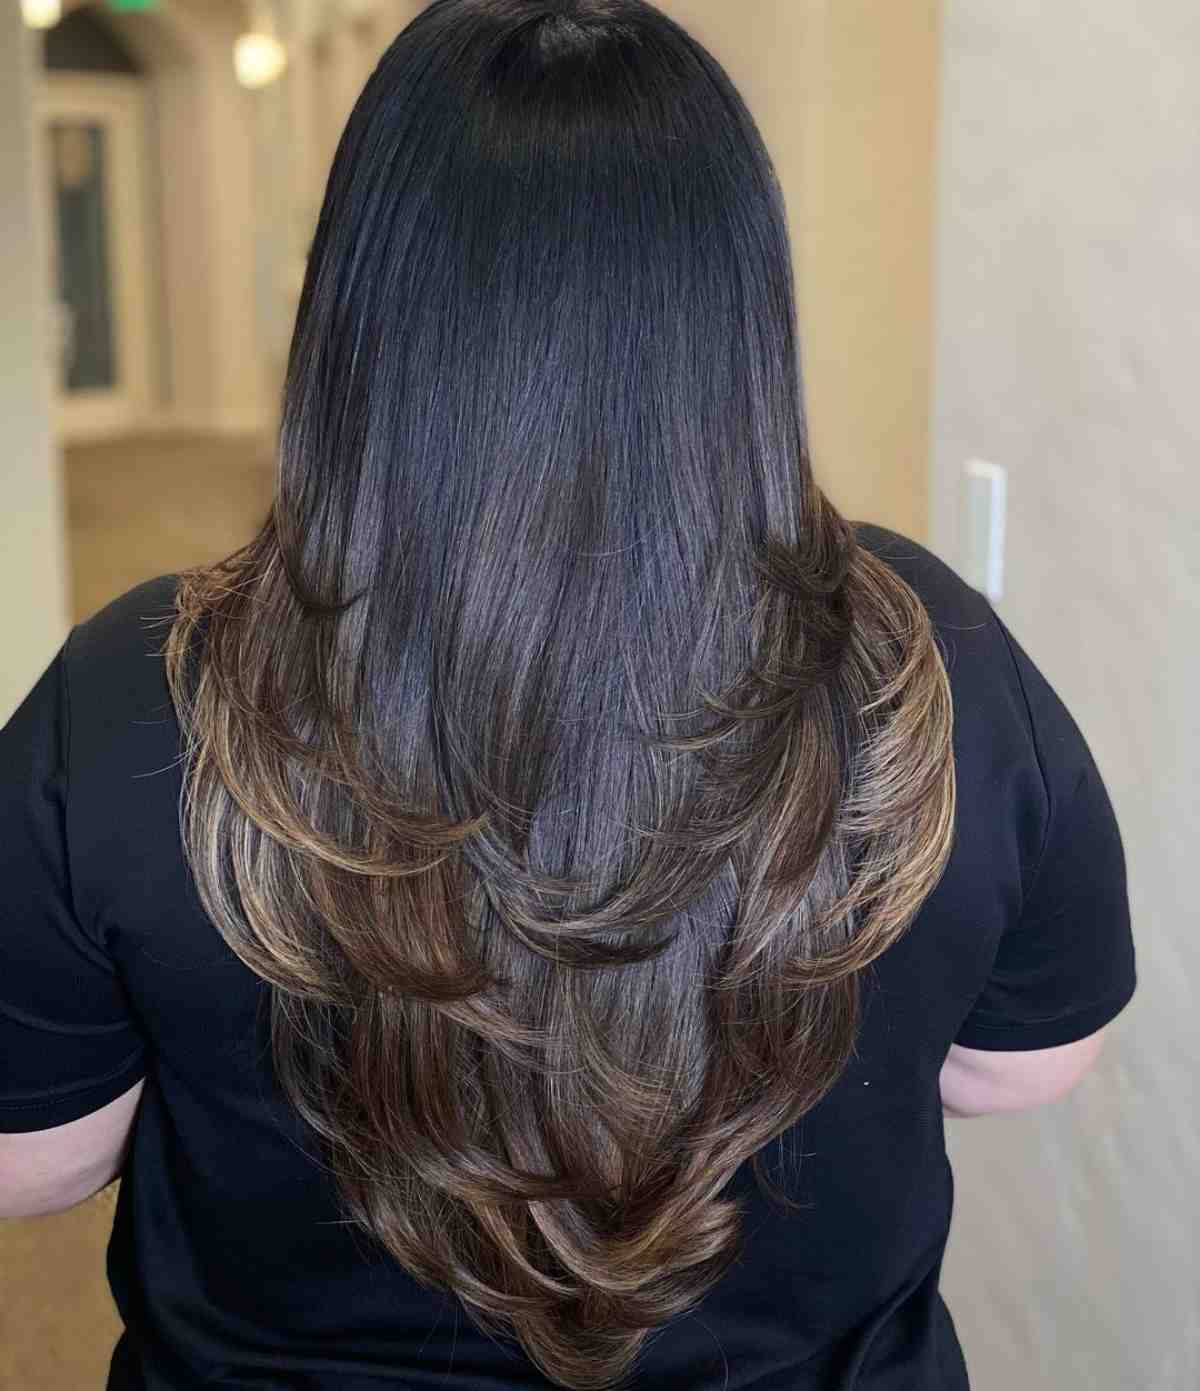 Discover 134+ graduation cut for long hair